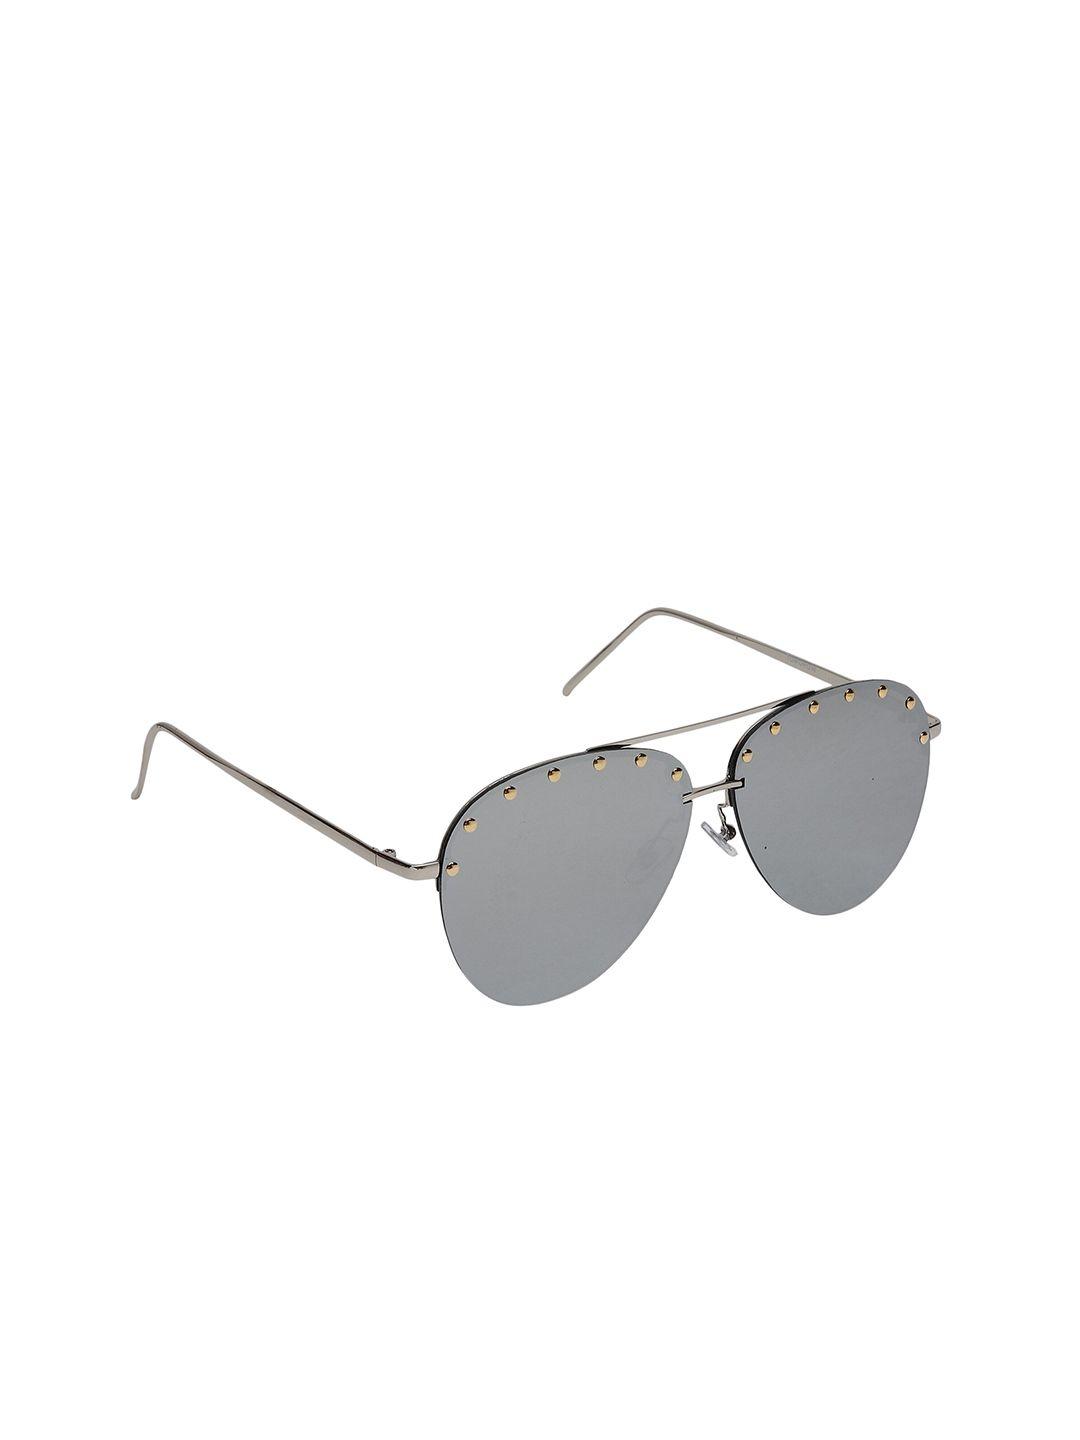 CELEBRITY SUNGLASSES Unisex Grey Aviator Sunglasses CL-TOM-Smith-10